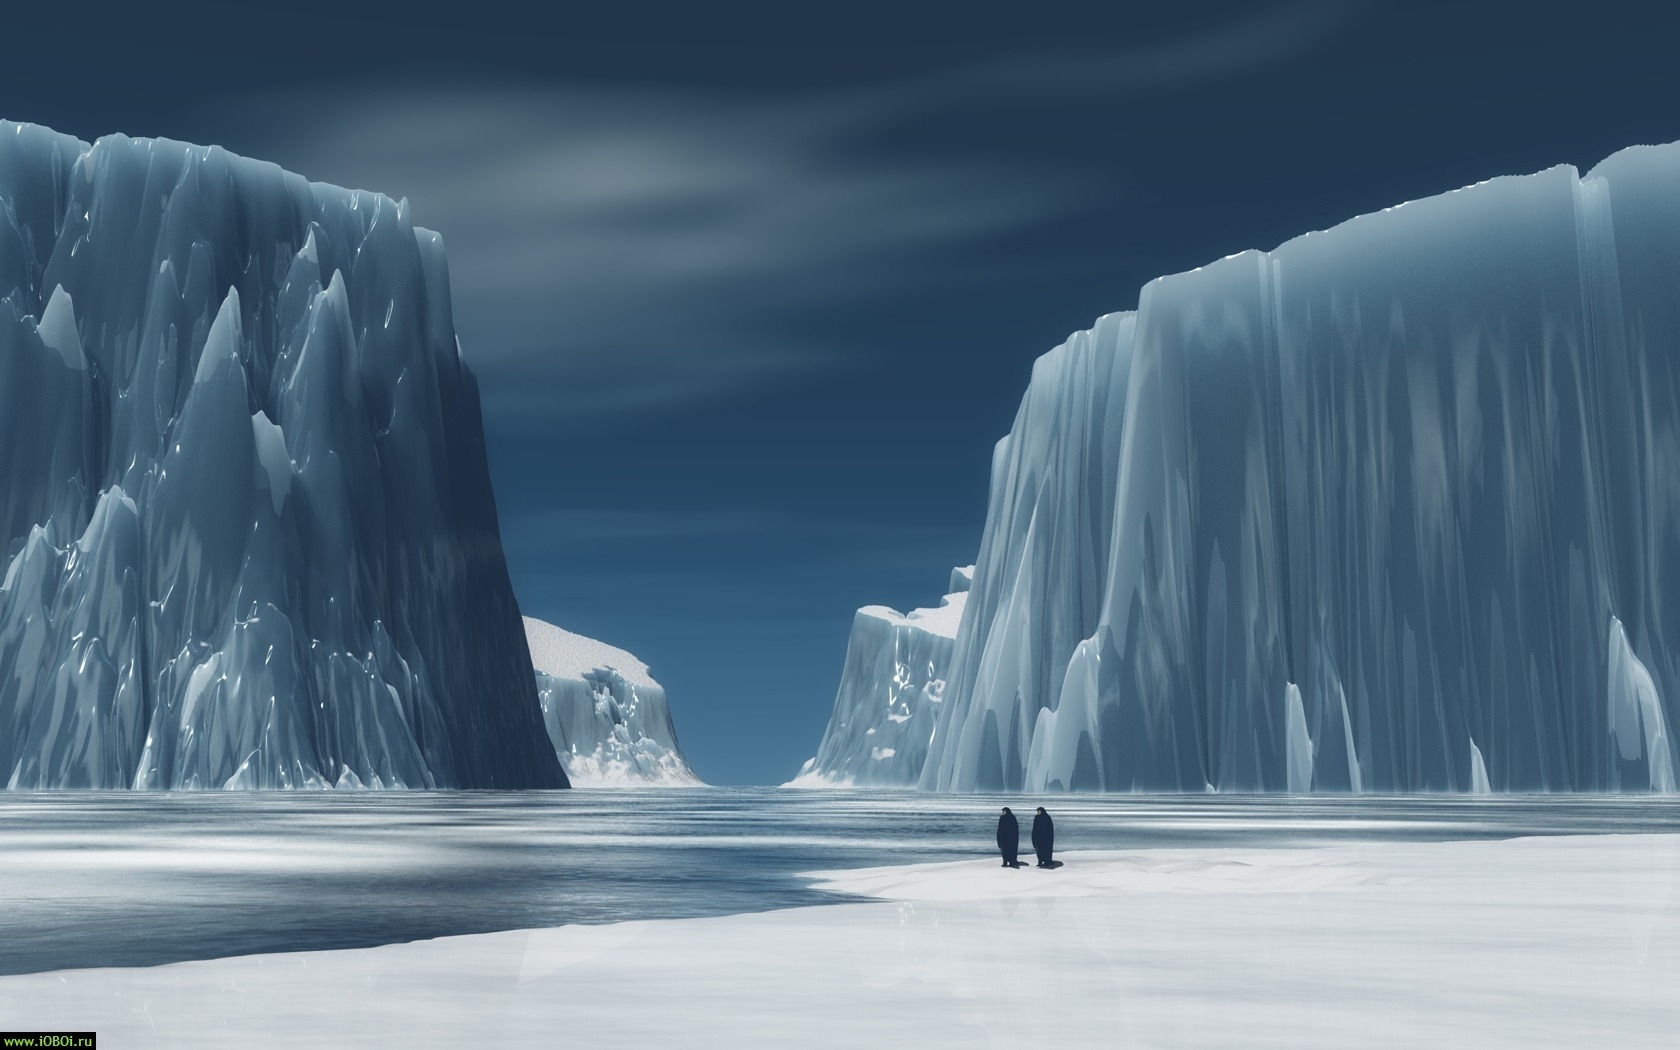 Mobile wallpaper: Landscape, Winter, Art, Antarctica, Arctic, 3101 download the picture for free